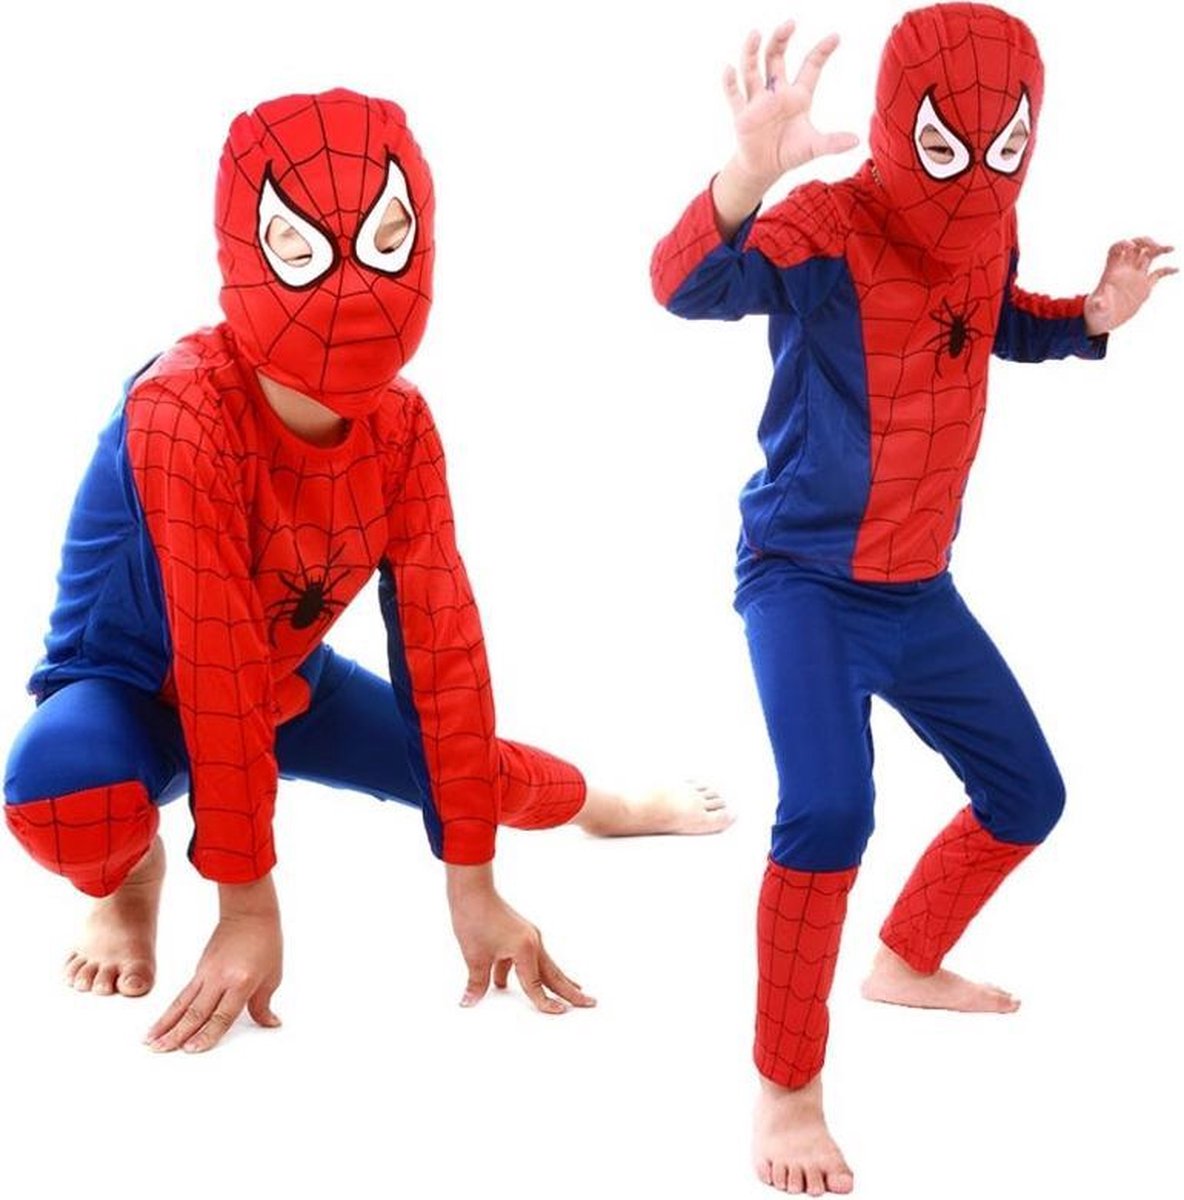 Enfant Spiderman, 4-6 ans (110-128)